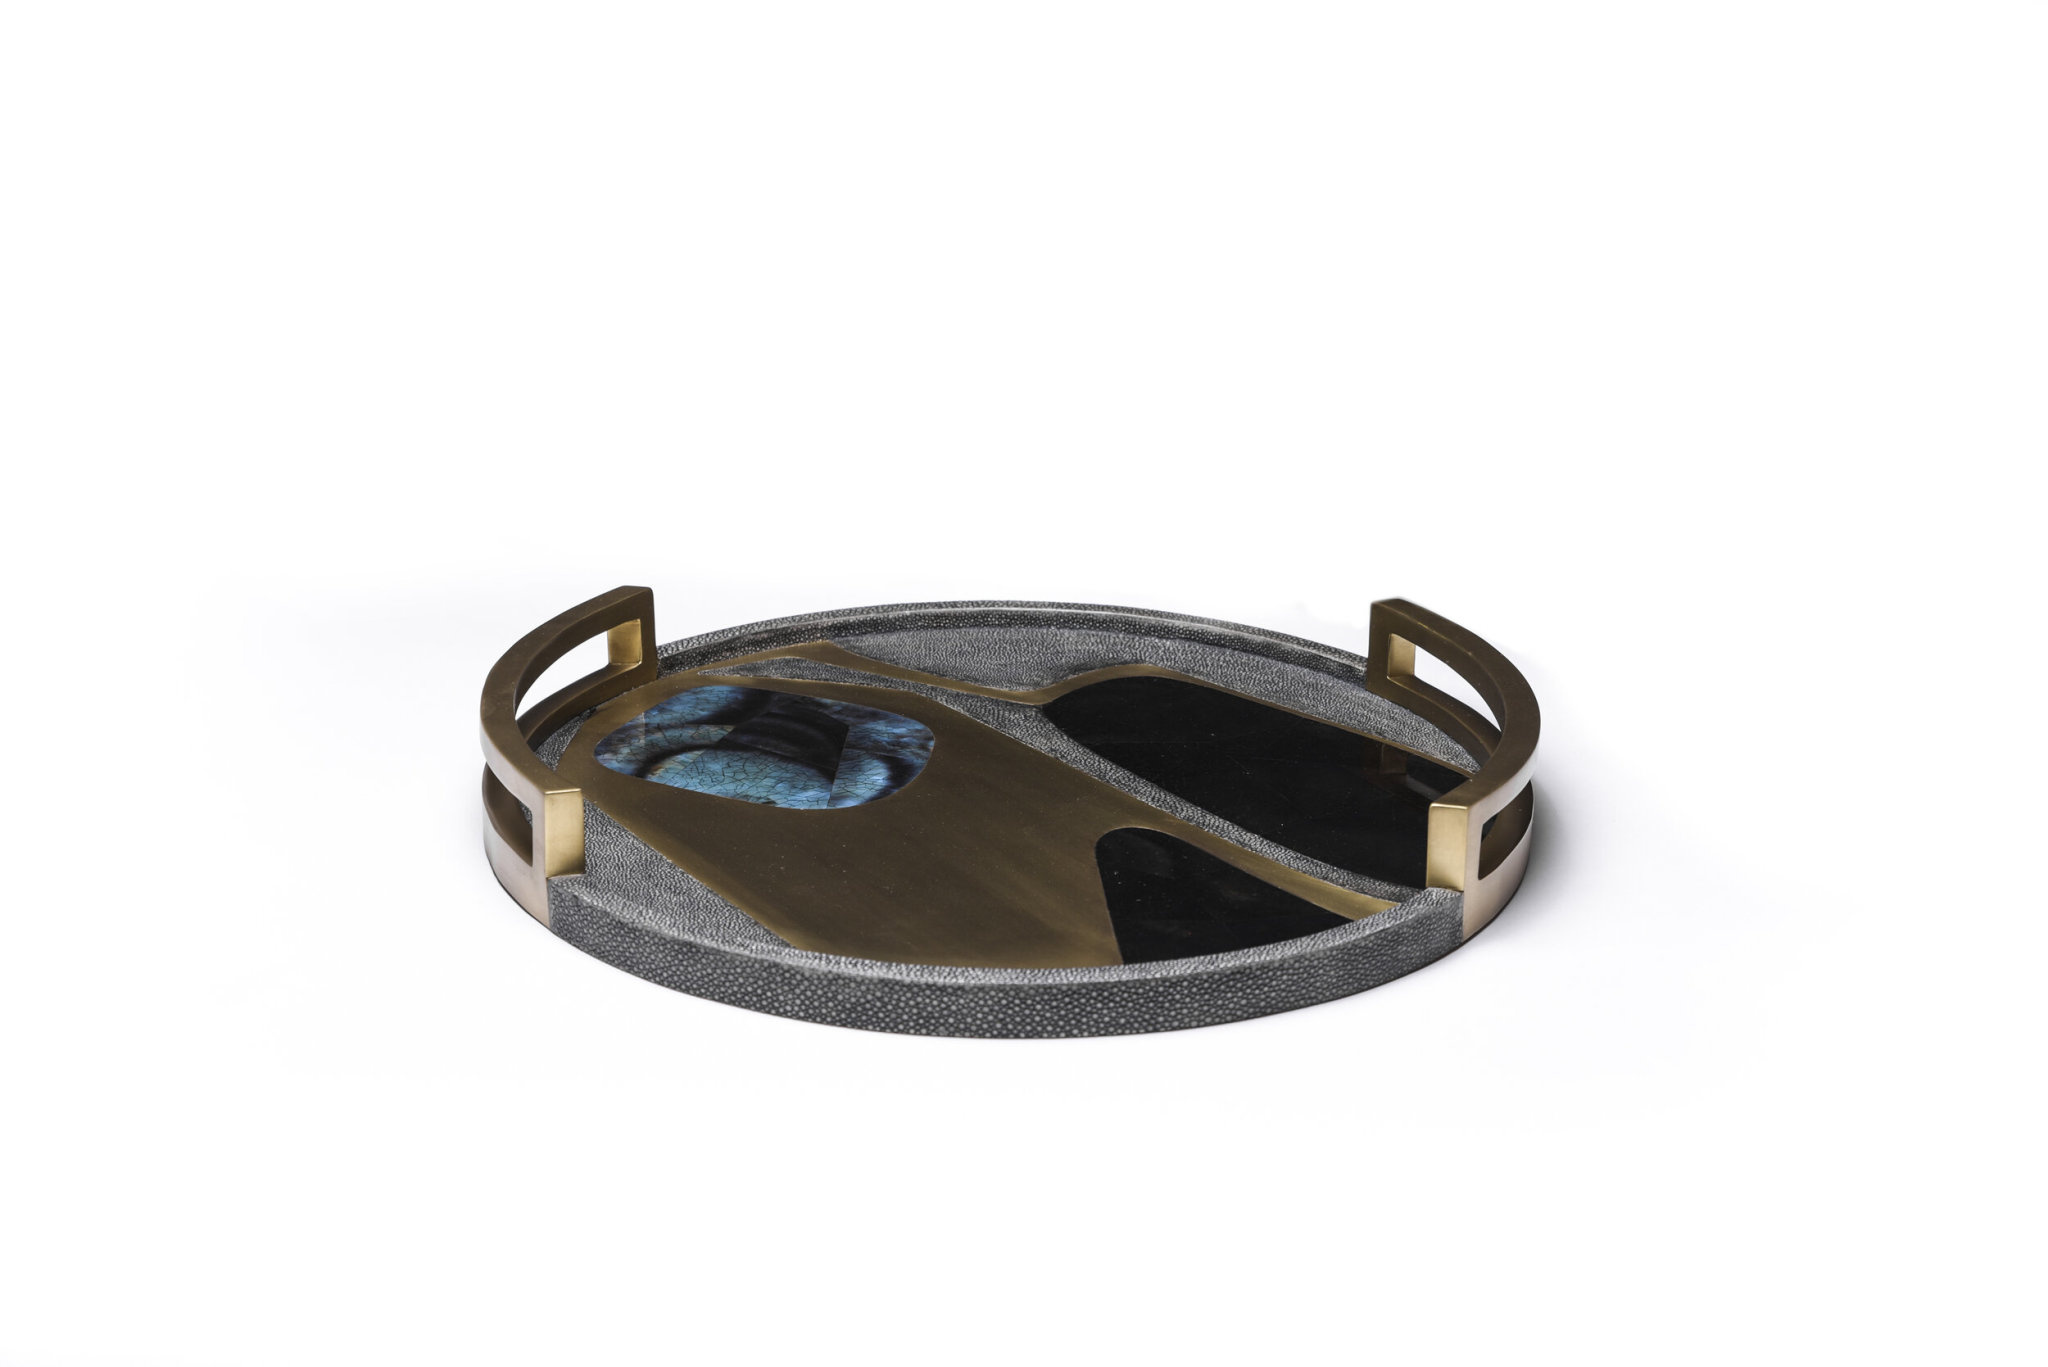 R & Y  Augousti - Cosmos Round Tray in Dark Stingray, Black Pen Shell and Black Lip Shell, Bronze Patina-Brass Handles-7